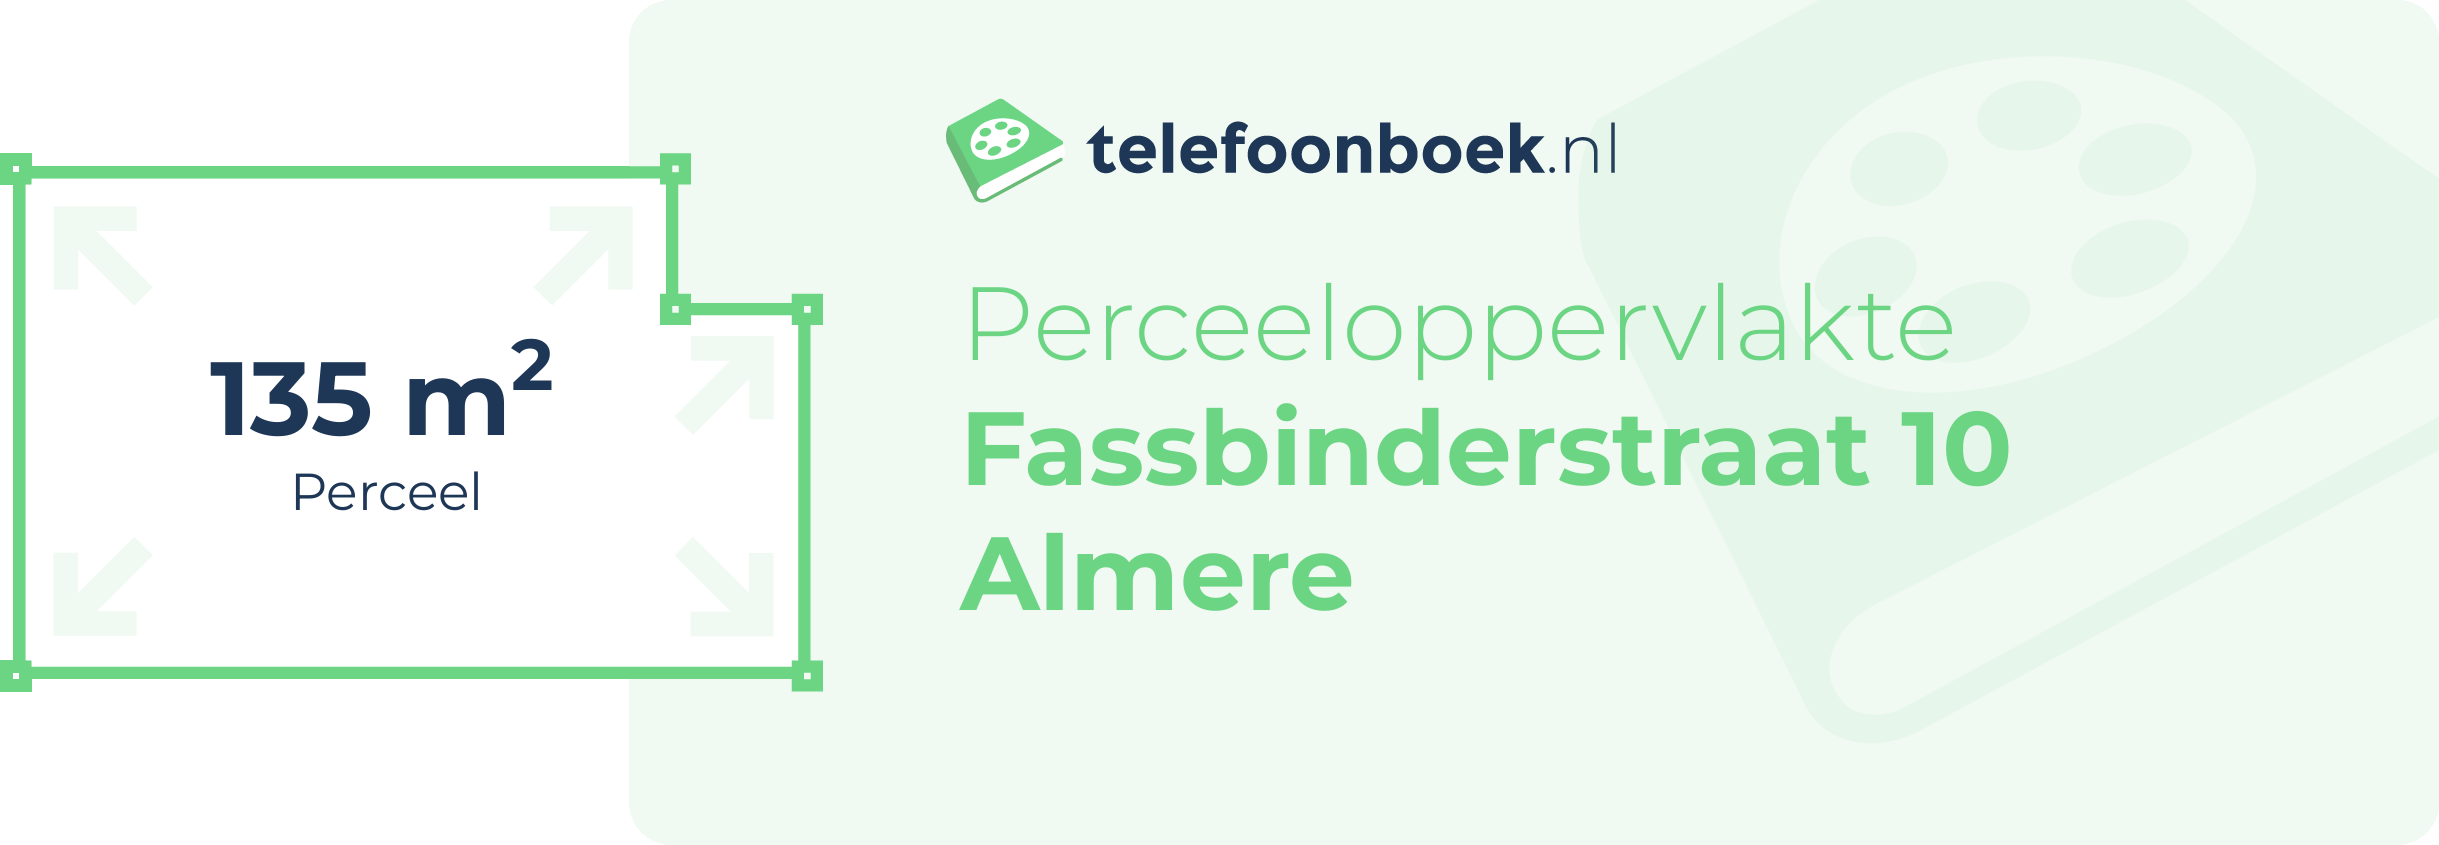 Perceeloppervlakte Fassbinderstraat 10 Almere